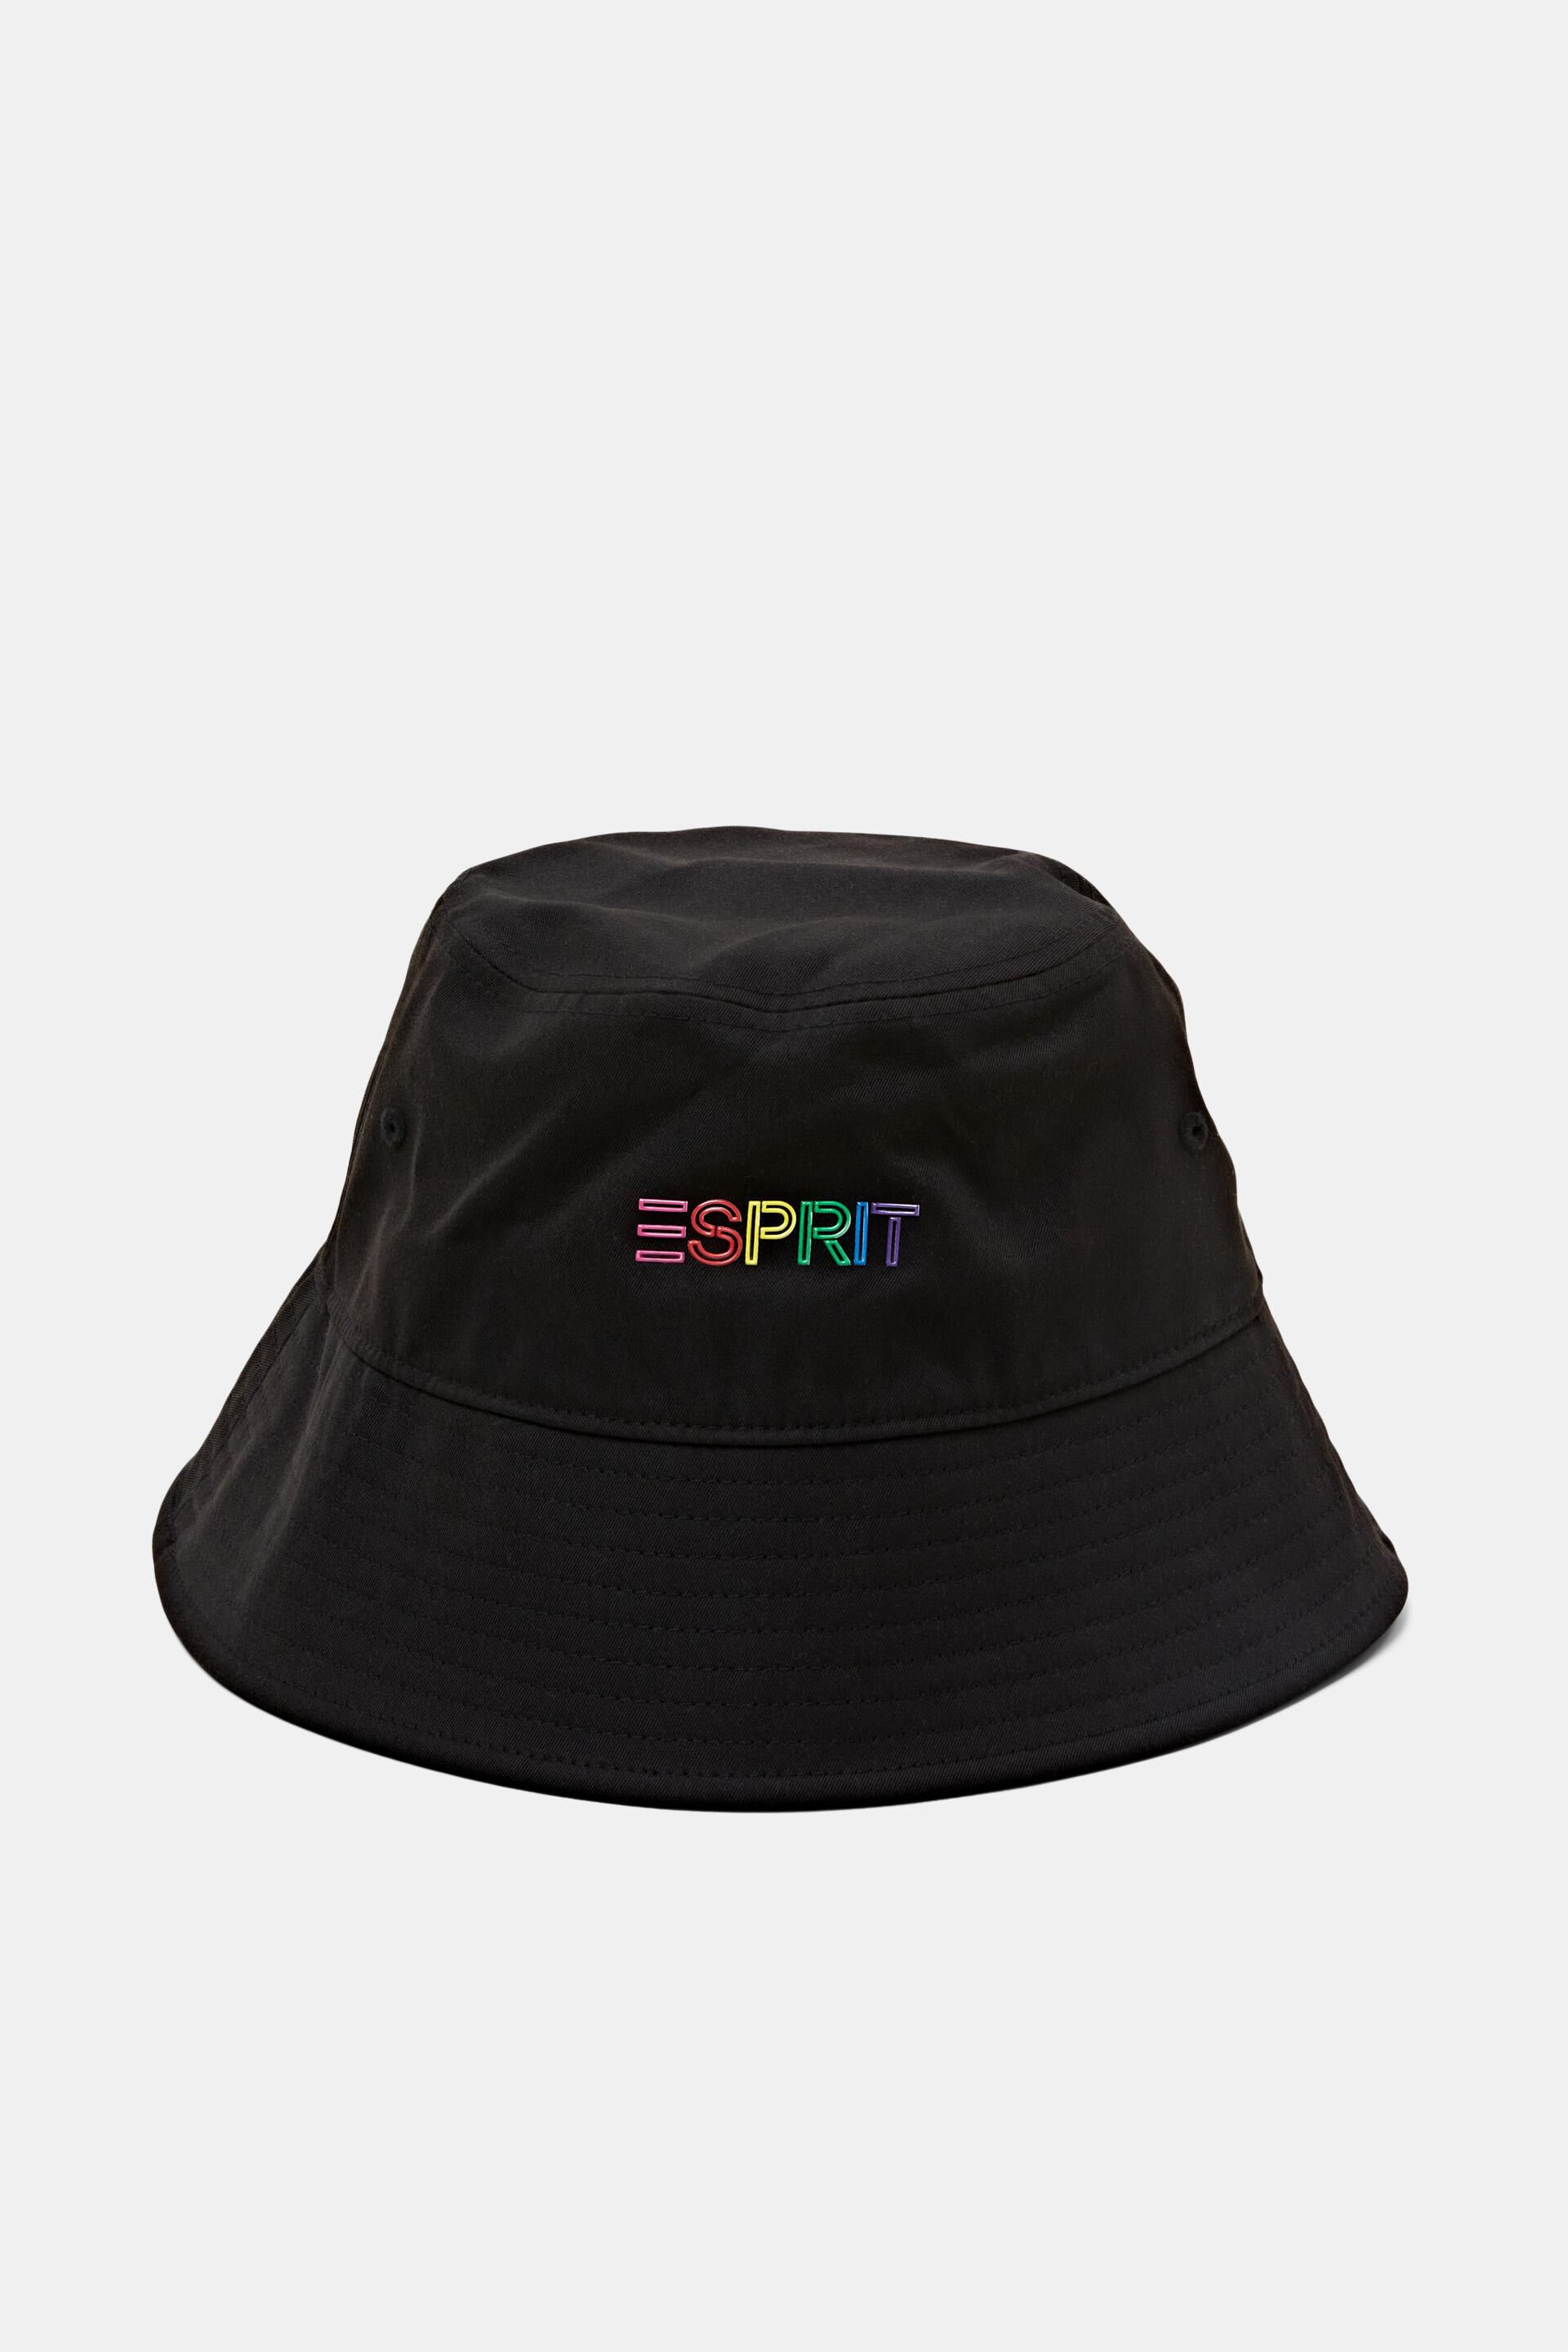 Esprit Mode Appliqué Twill Bucket Hat